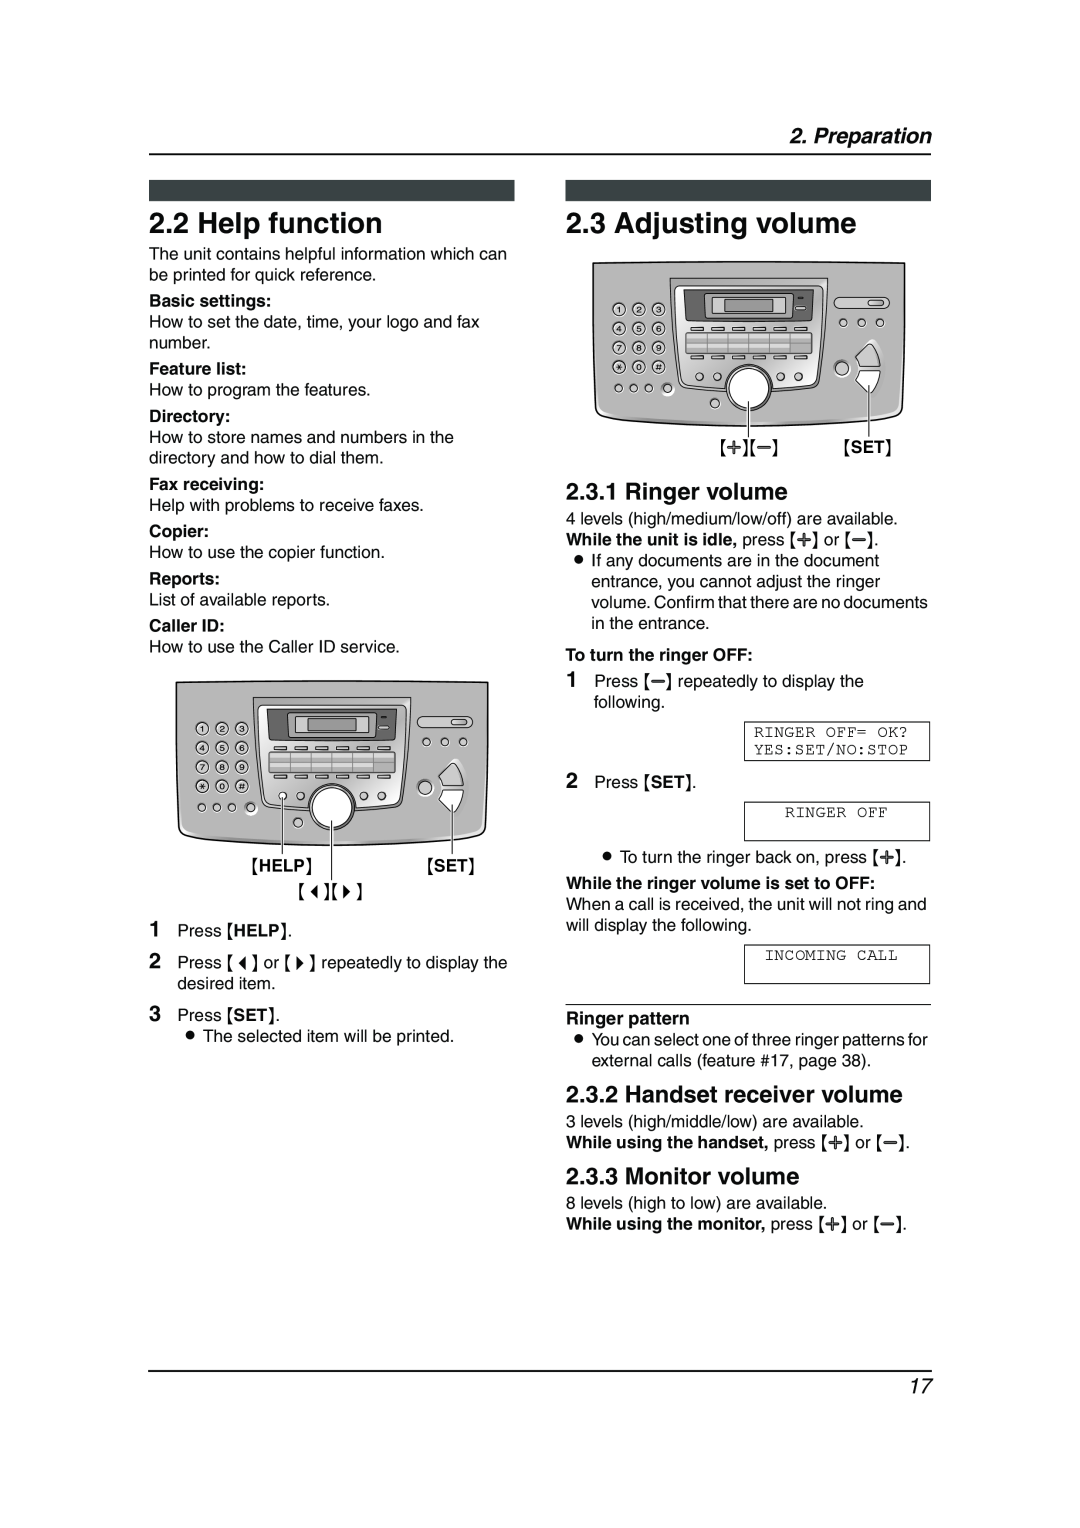 Panasonic KX-FL511AL Help function, Adjusting volume, Ringer volume, Handset receiver volume, Monitor volume, Preparation 